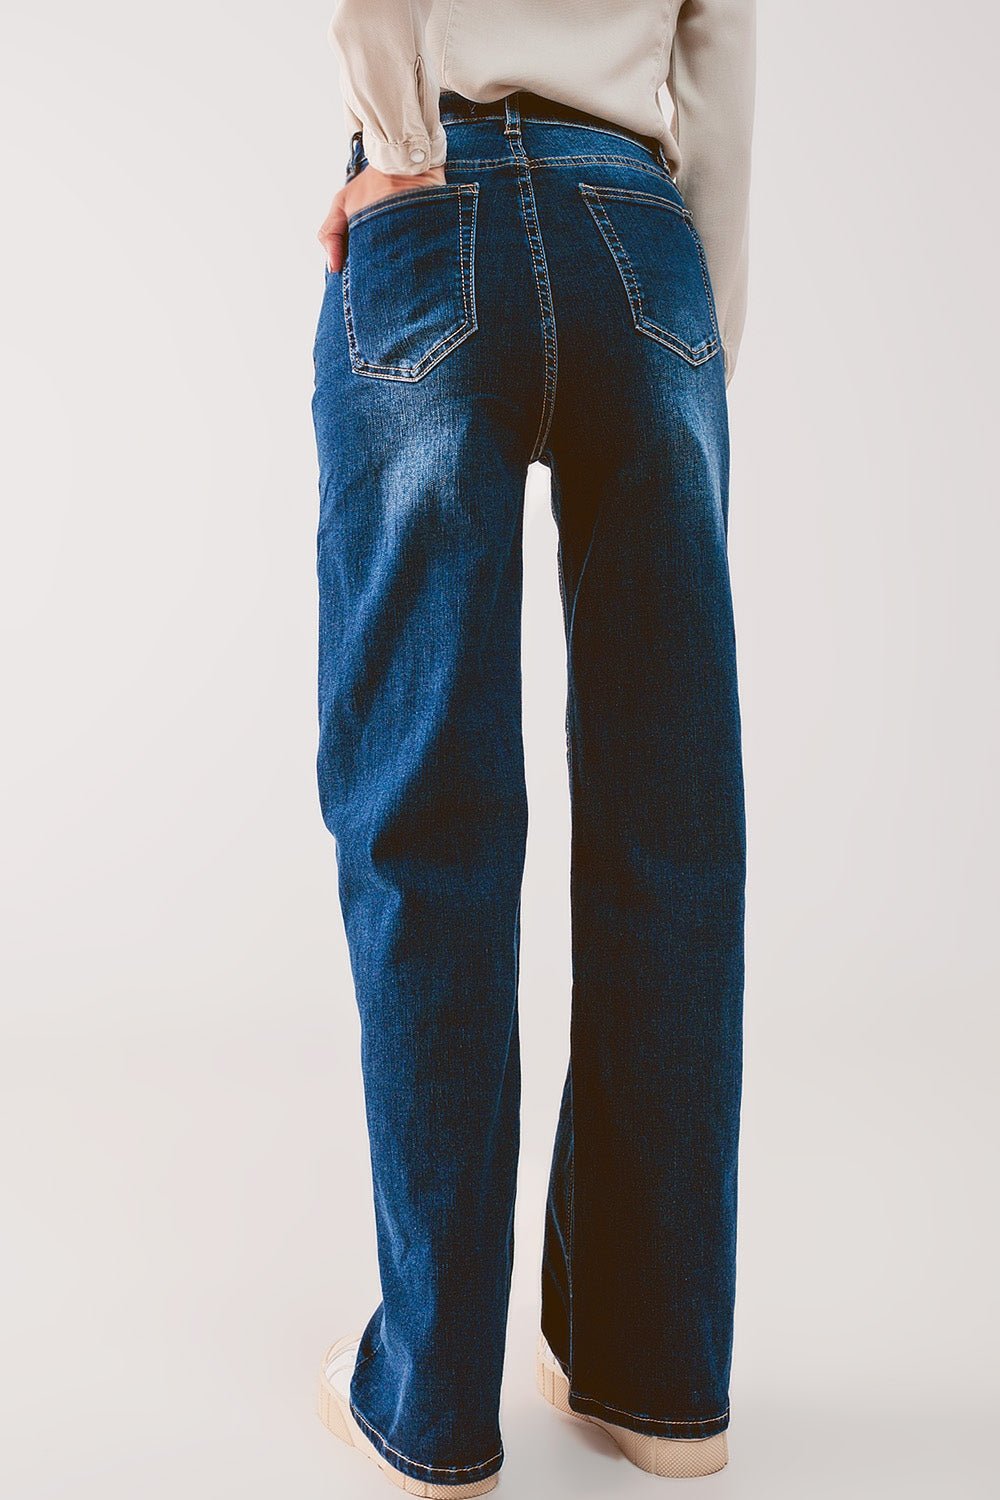 Straight Leg 90s Jeans With in Dark Blue - Mack & Harvie